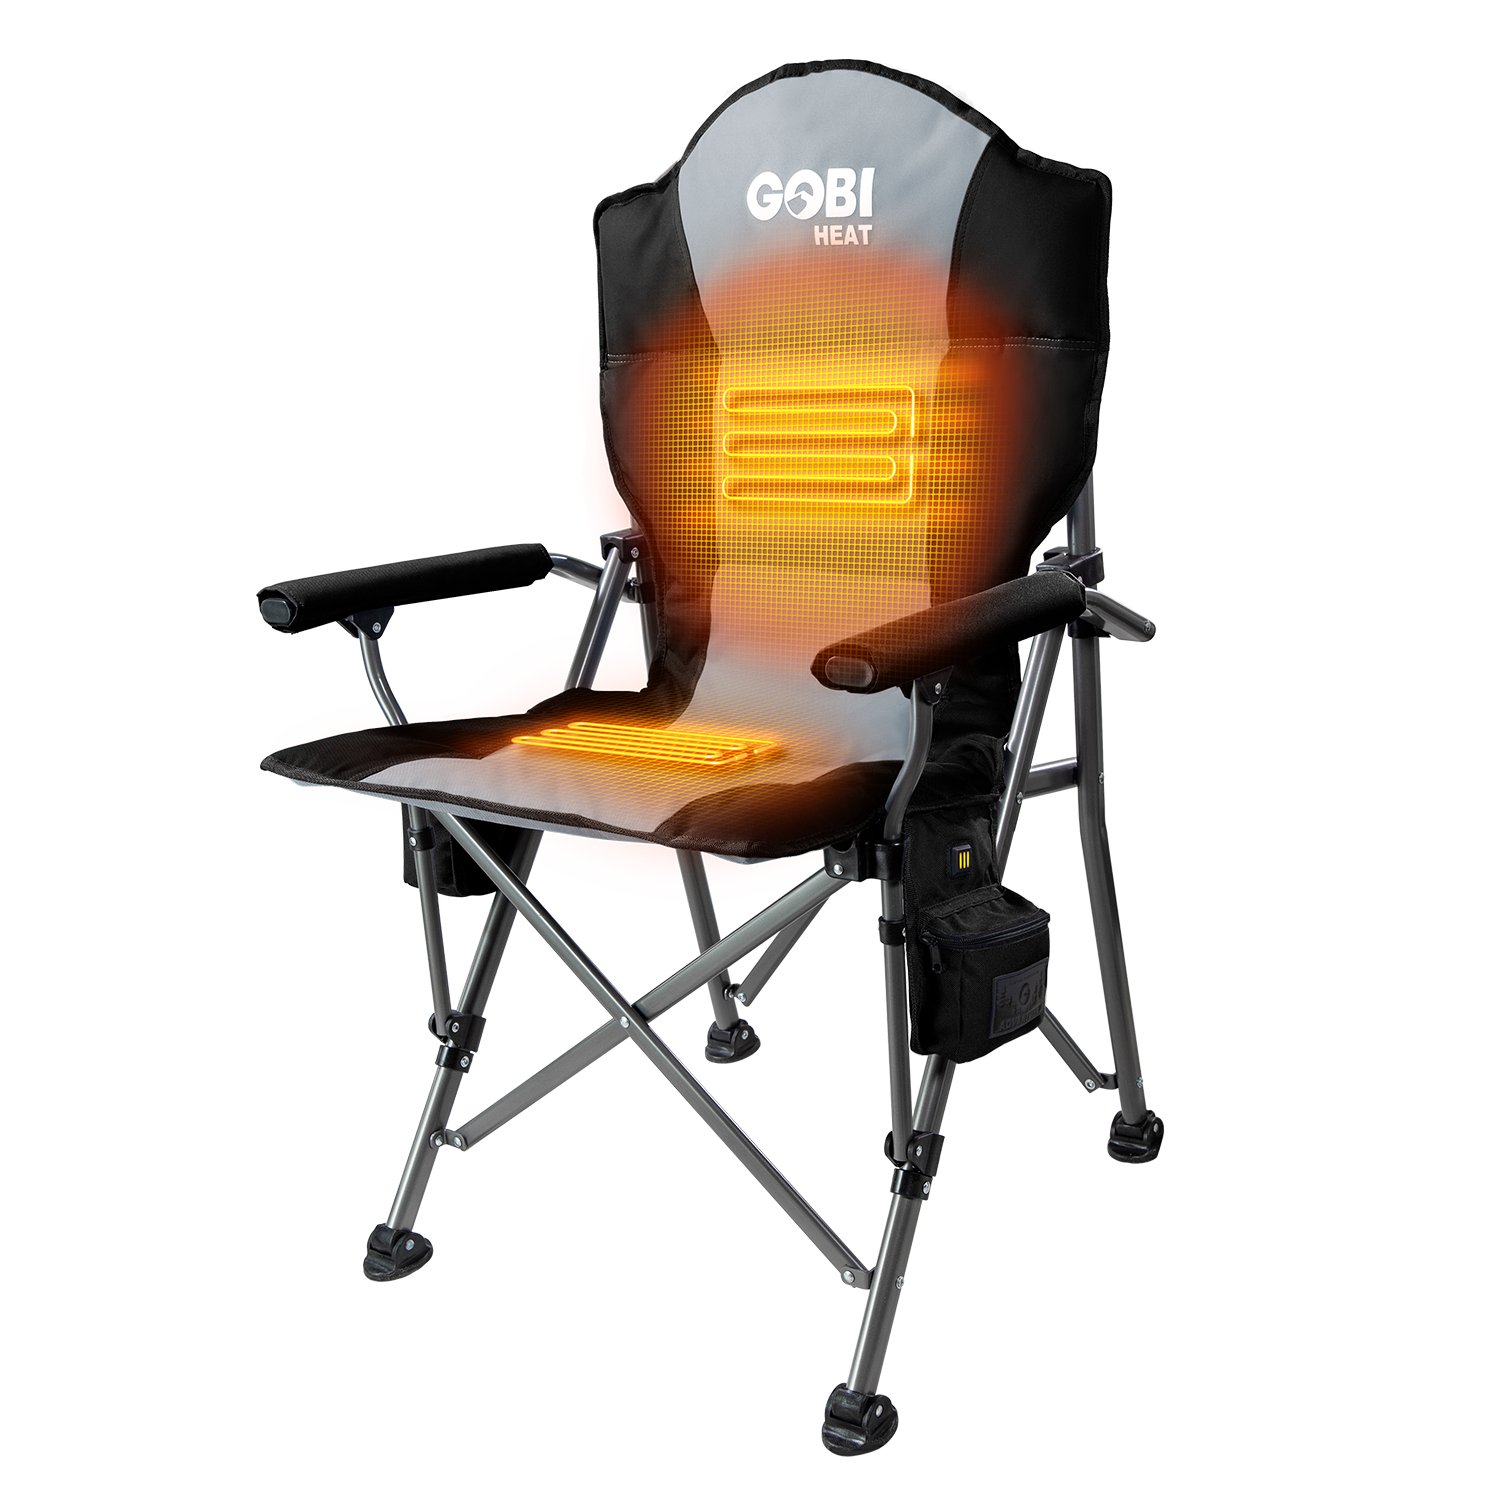 Terrain Heated Camping Chair Slate